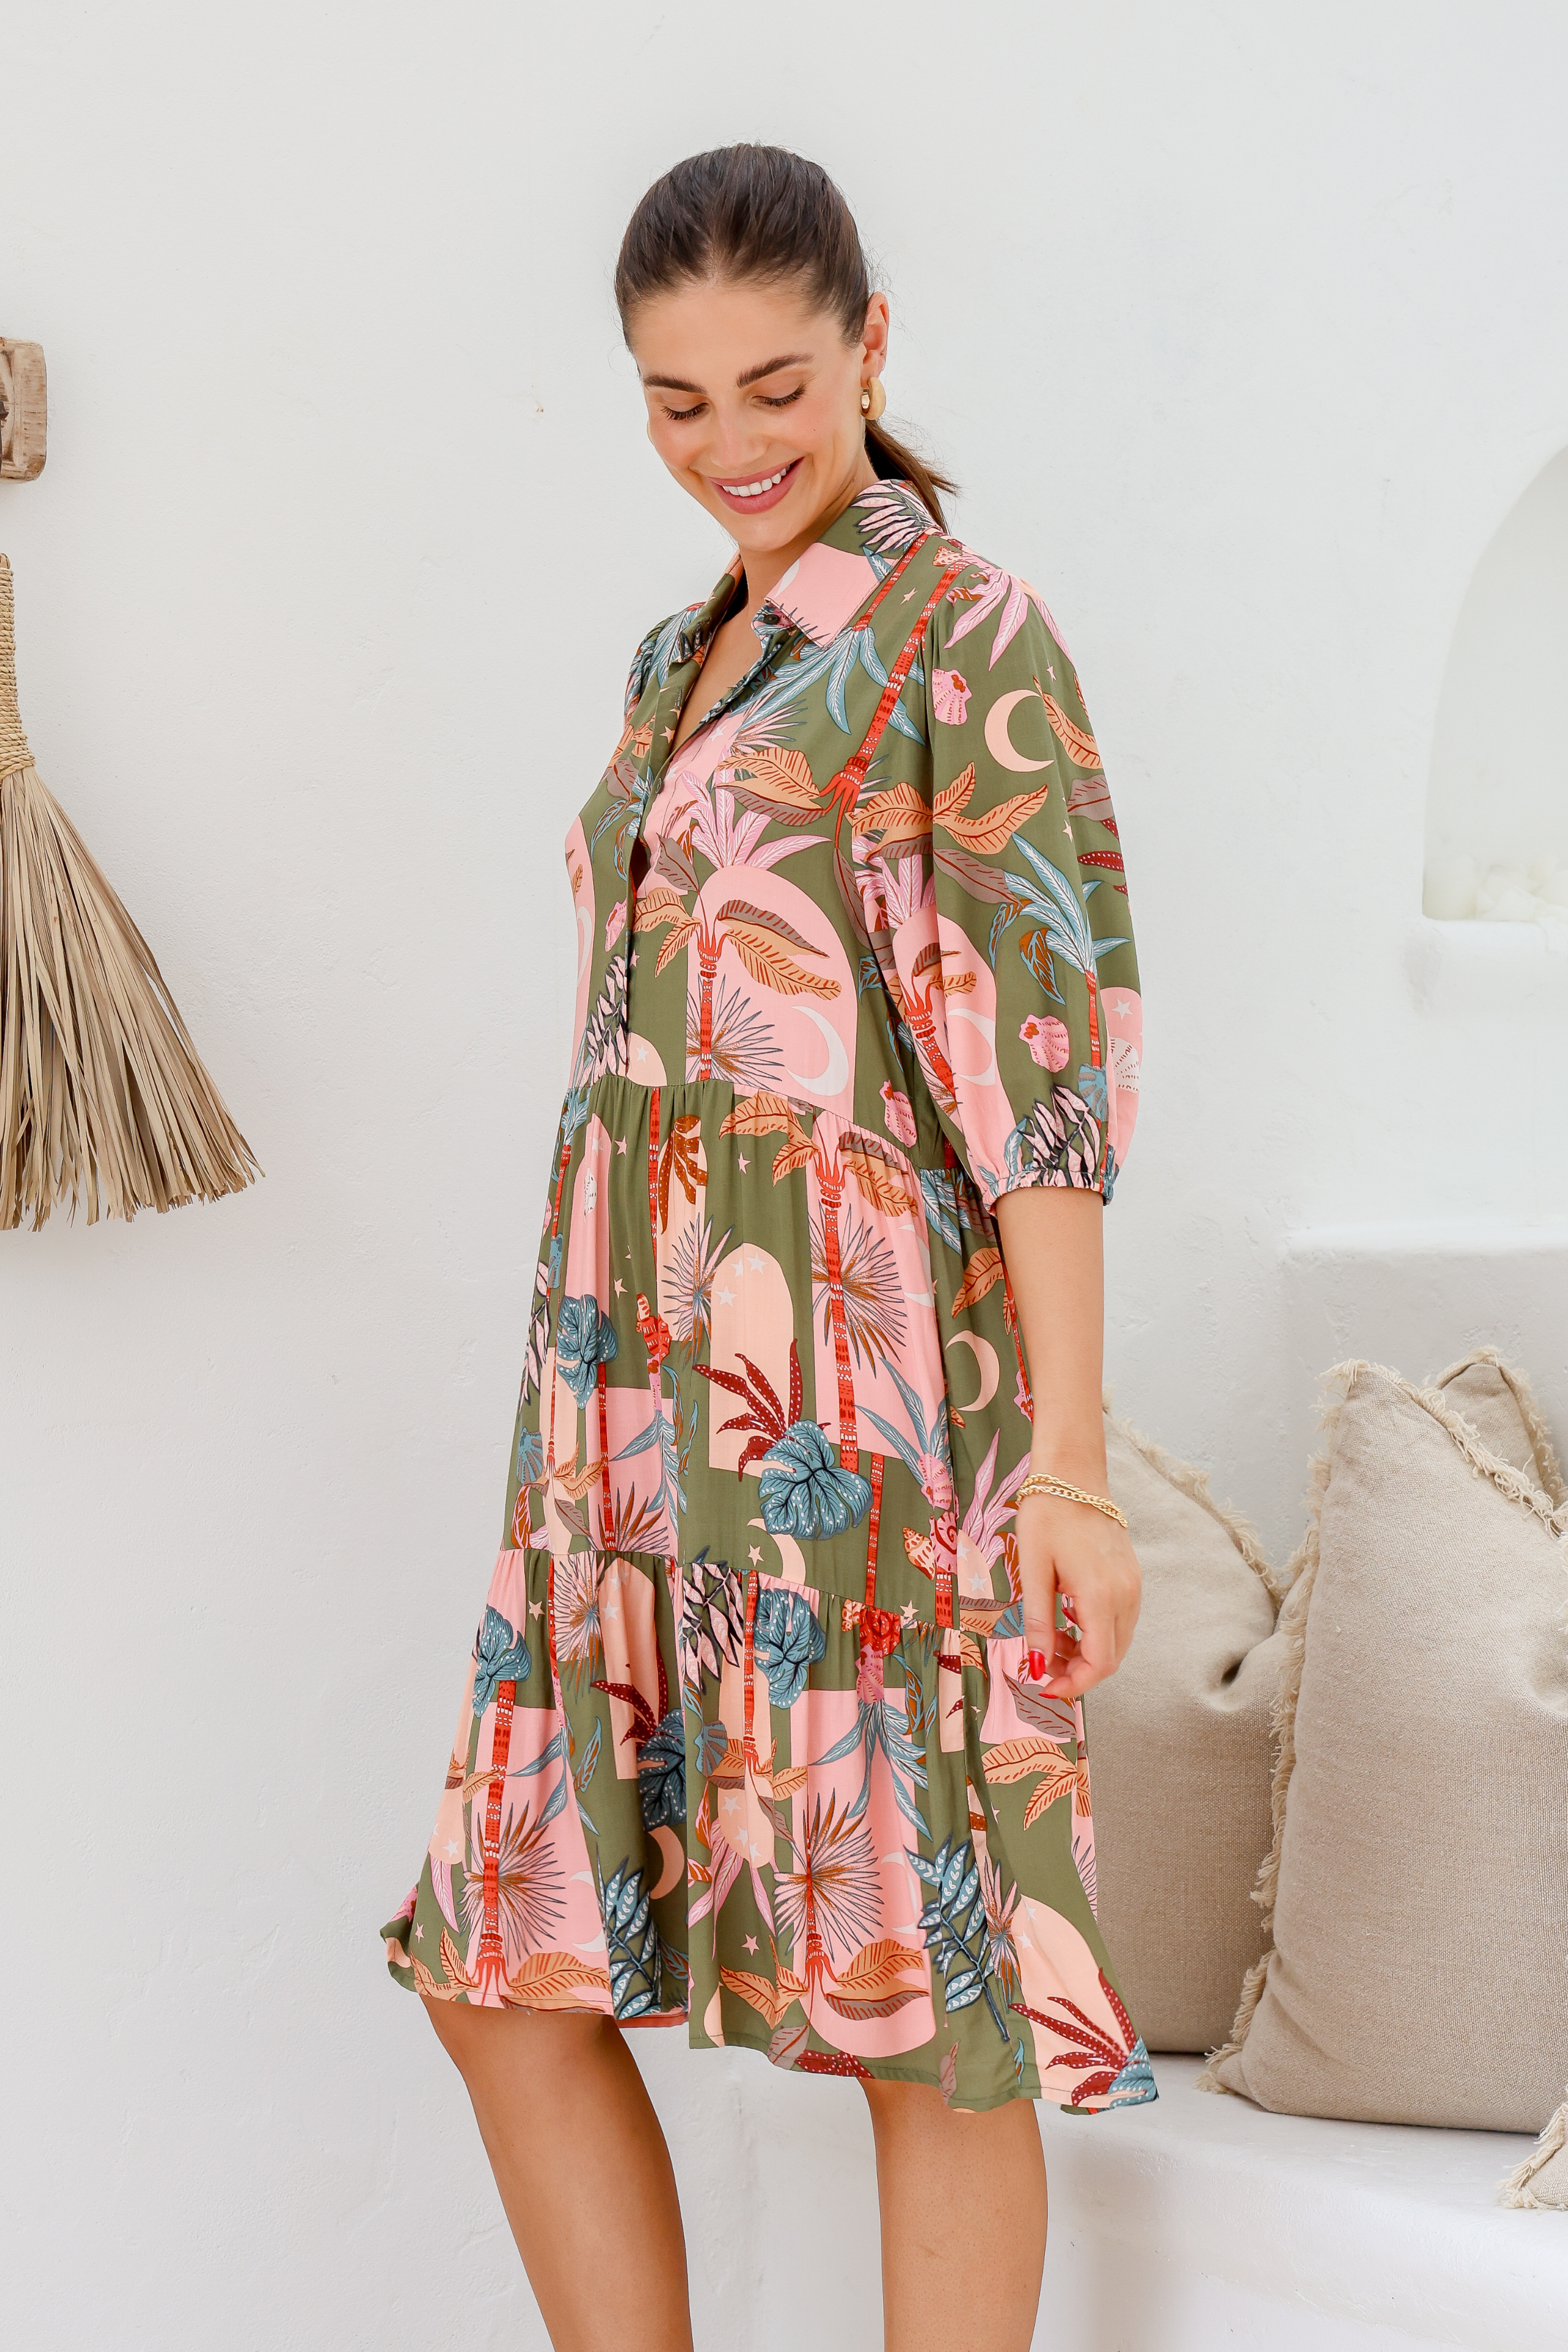 Palermo Dress in Khaki Floral